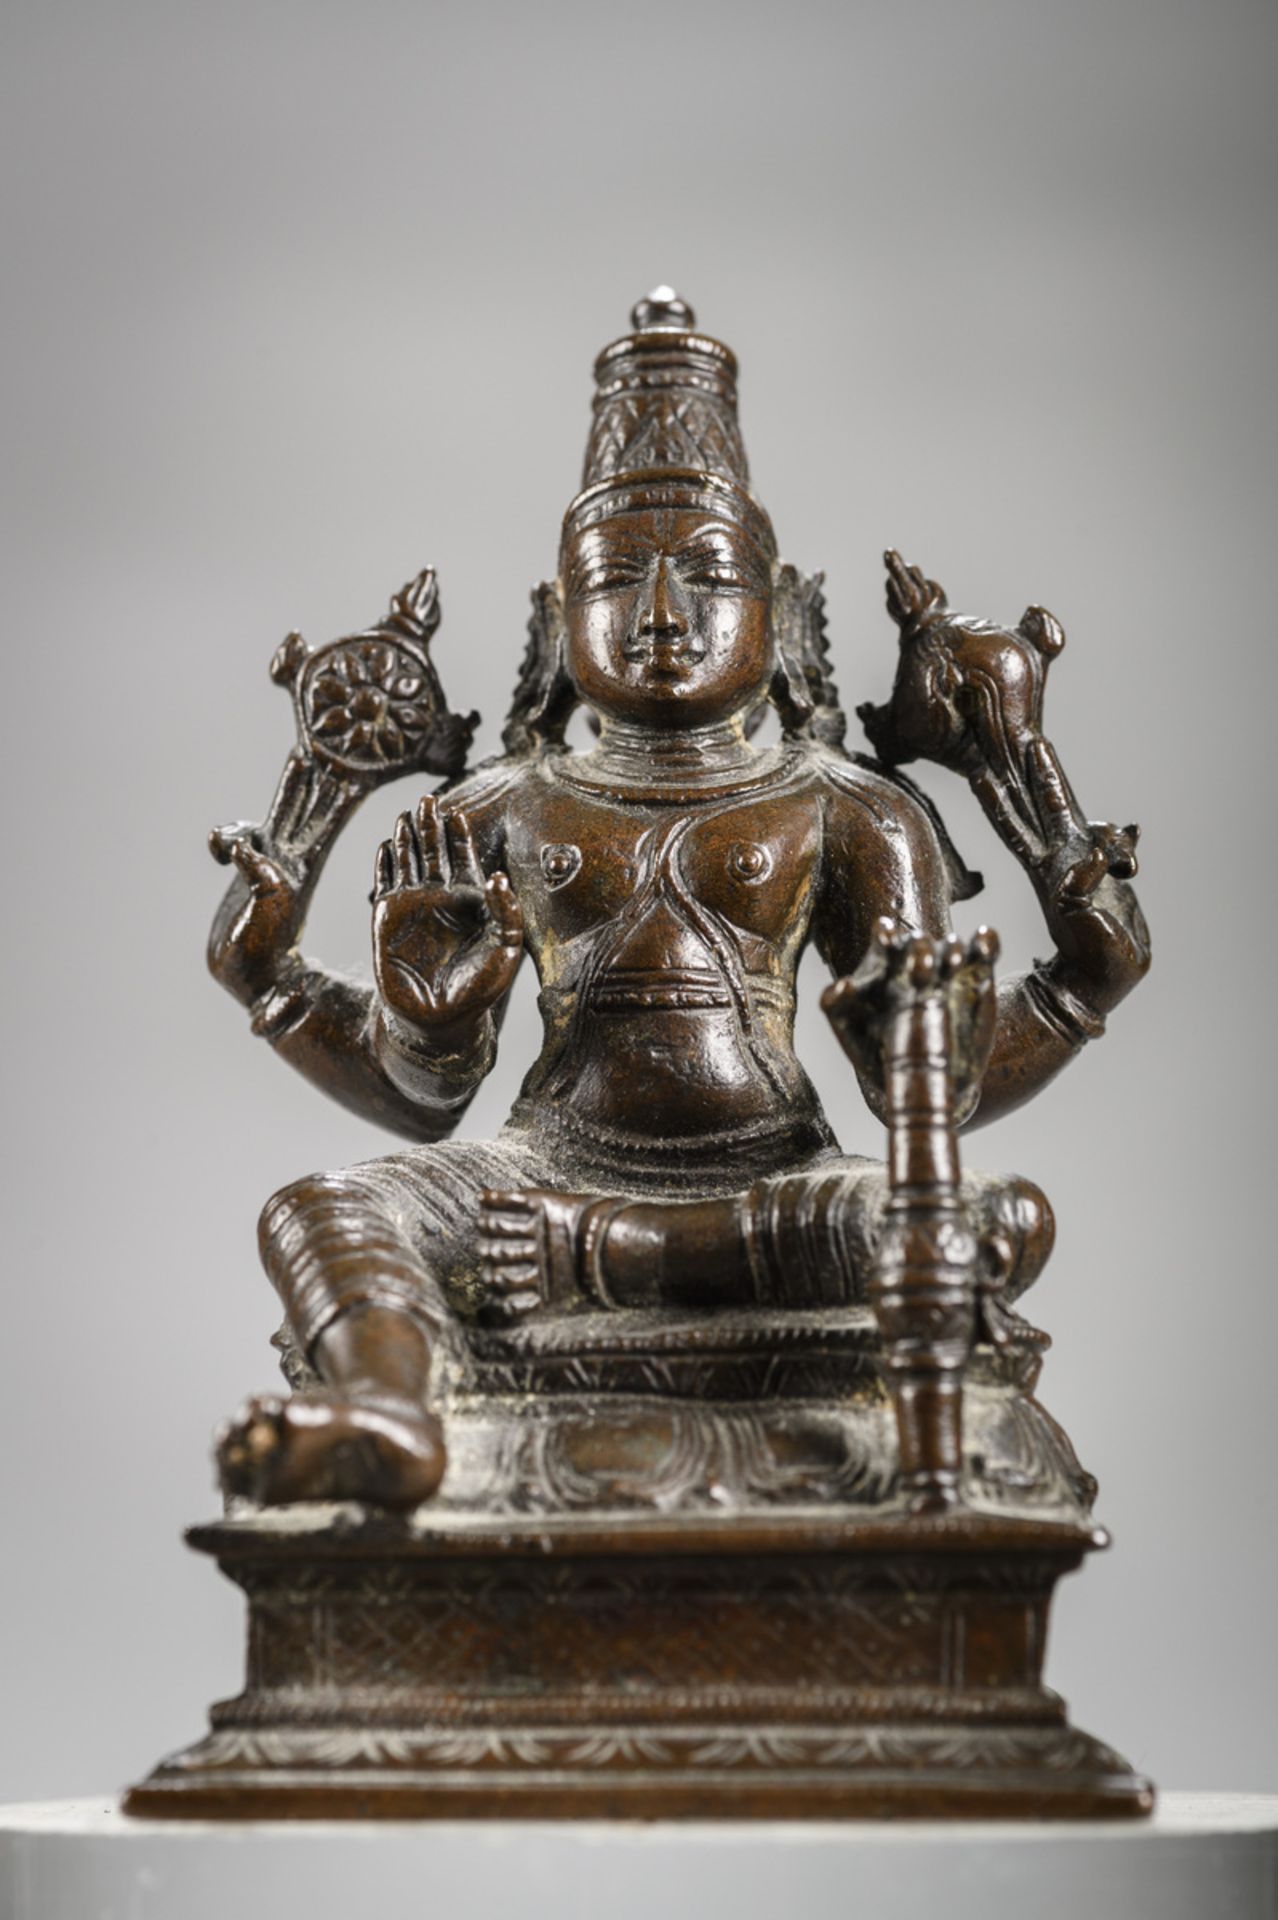 Indian bronze sculpture 'Vishnu', 18th - 19th century (h 10.3 cm)